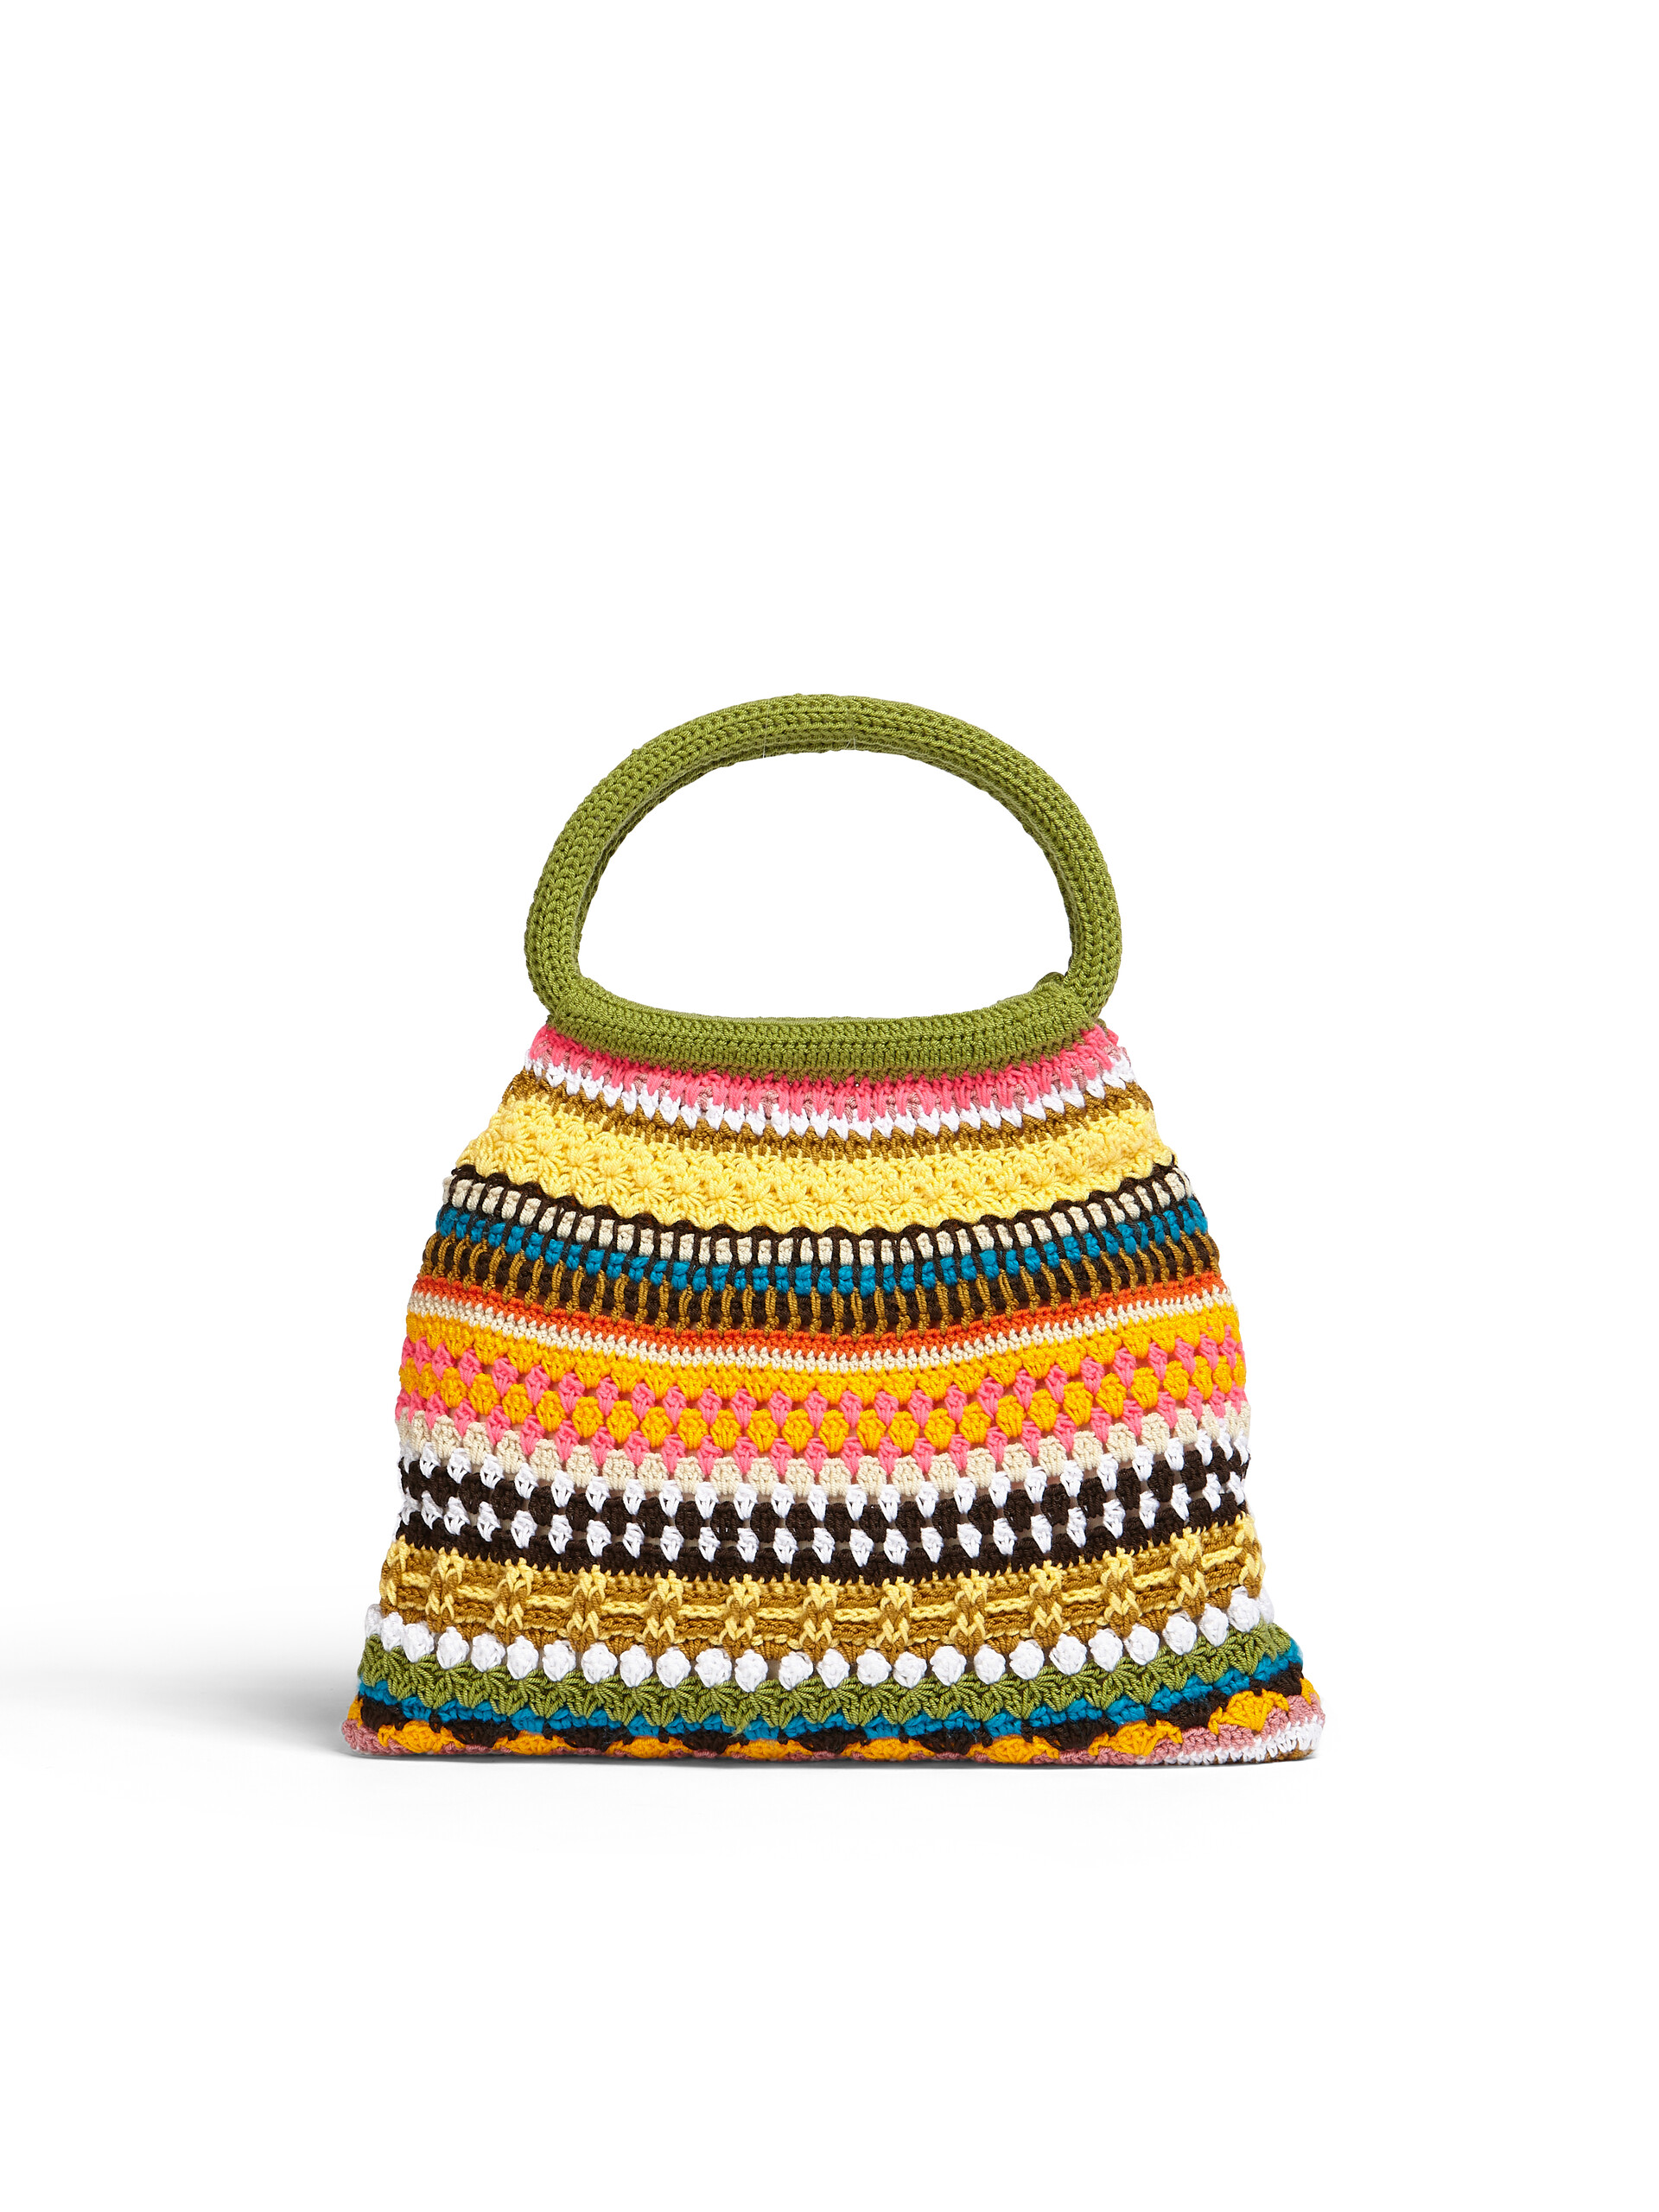 MARNI MARKET GRANNY bag in green crochet - Bags - Image 3